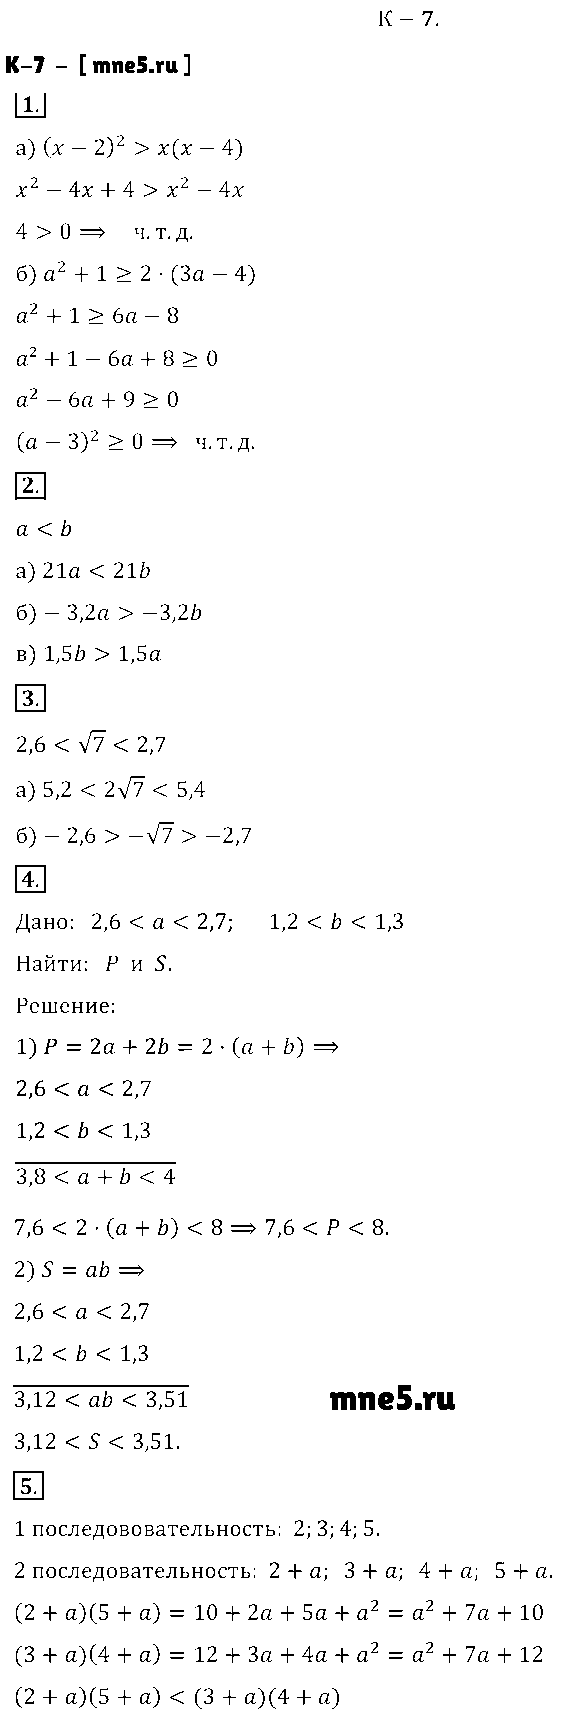 ГДЗ Алгебра 8 класс - K-7